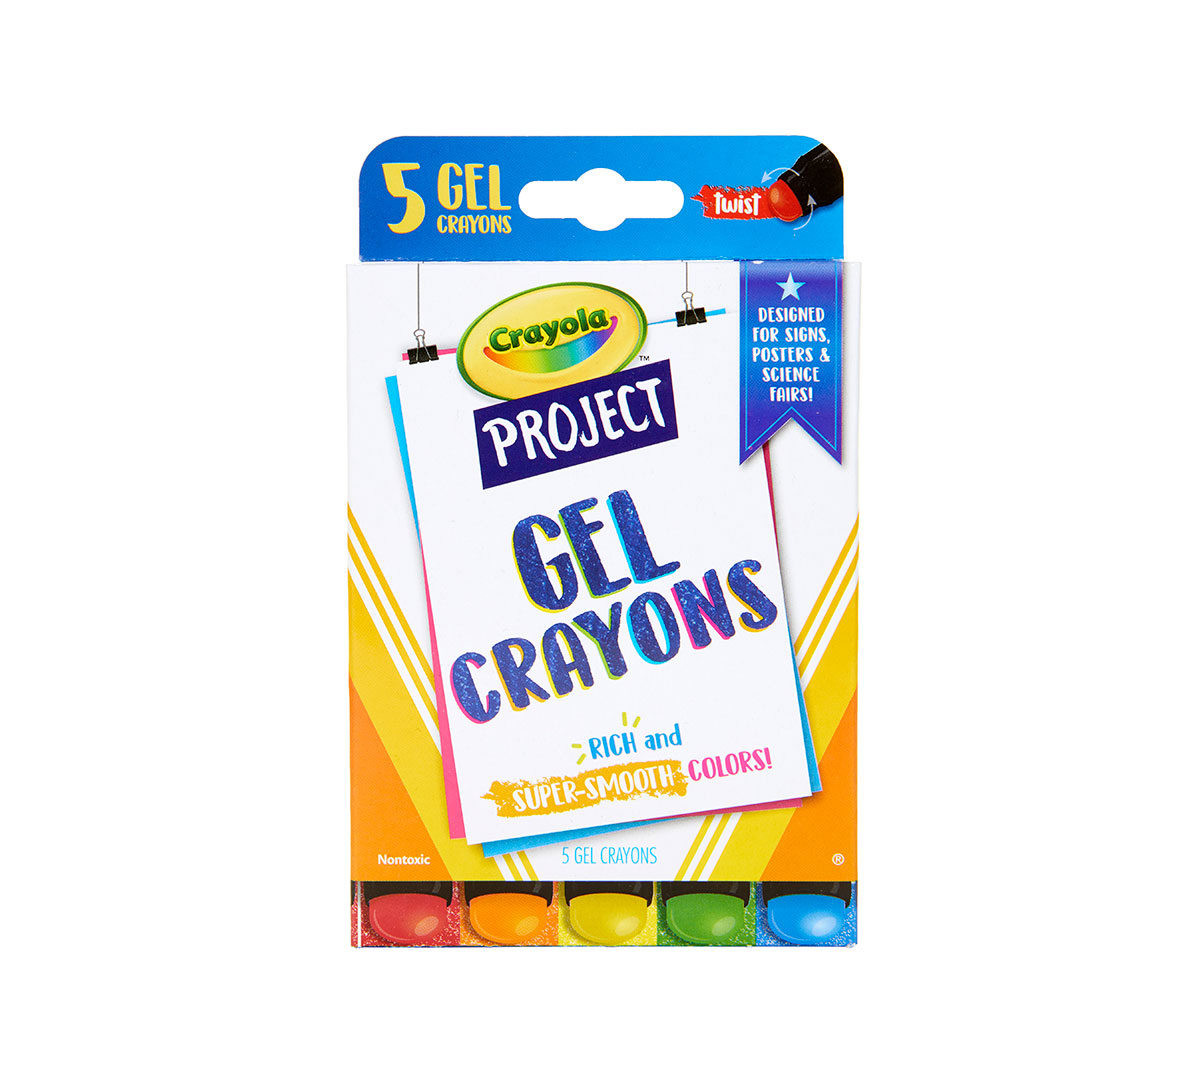 https://shop.crayola.com/on/demandware.static/-/Sites-crayola-storefront/default/dw575a750c/images/52-9509-0-200_Project_Gel-Crayons_5ct_F1.jpg